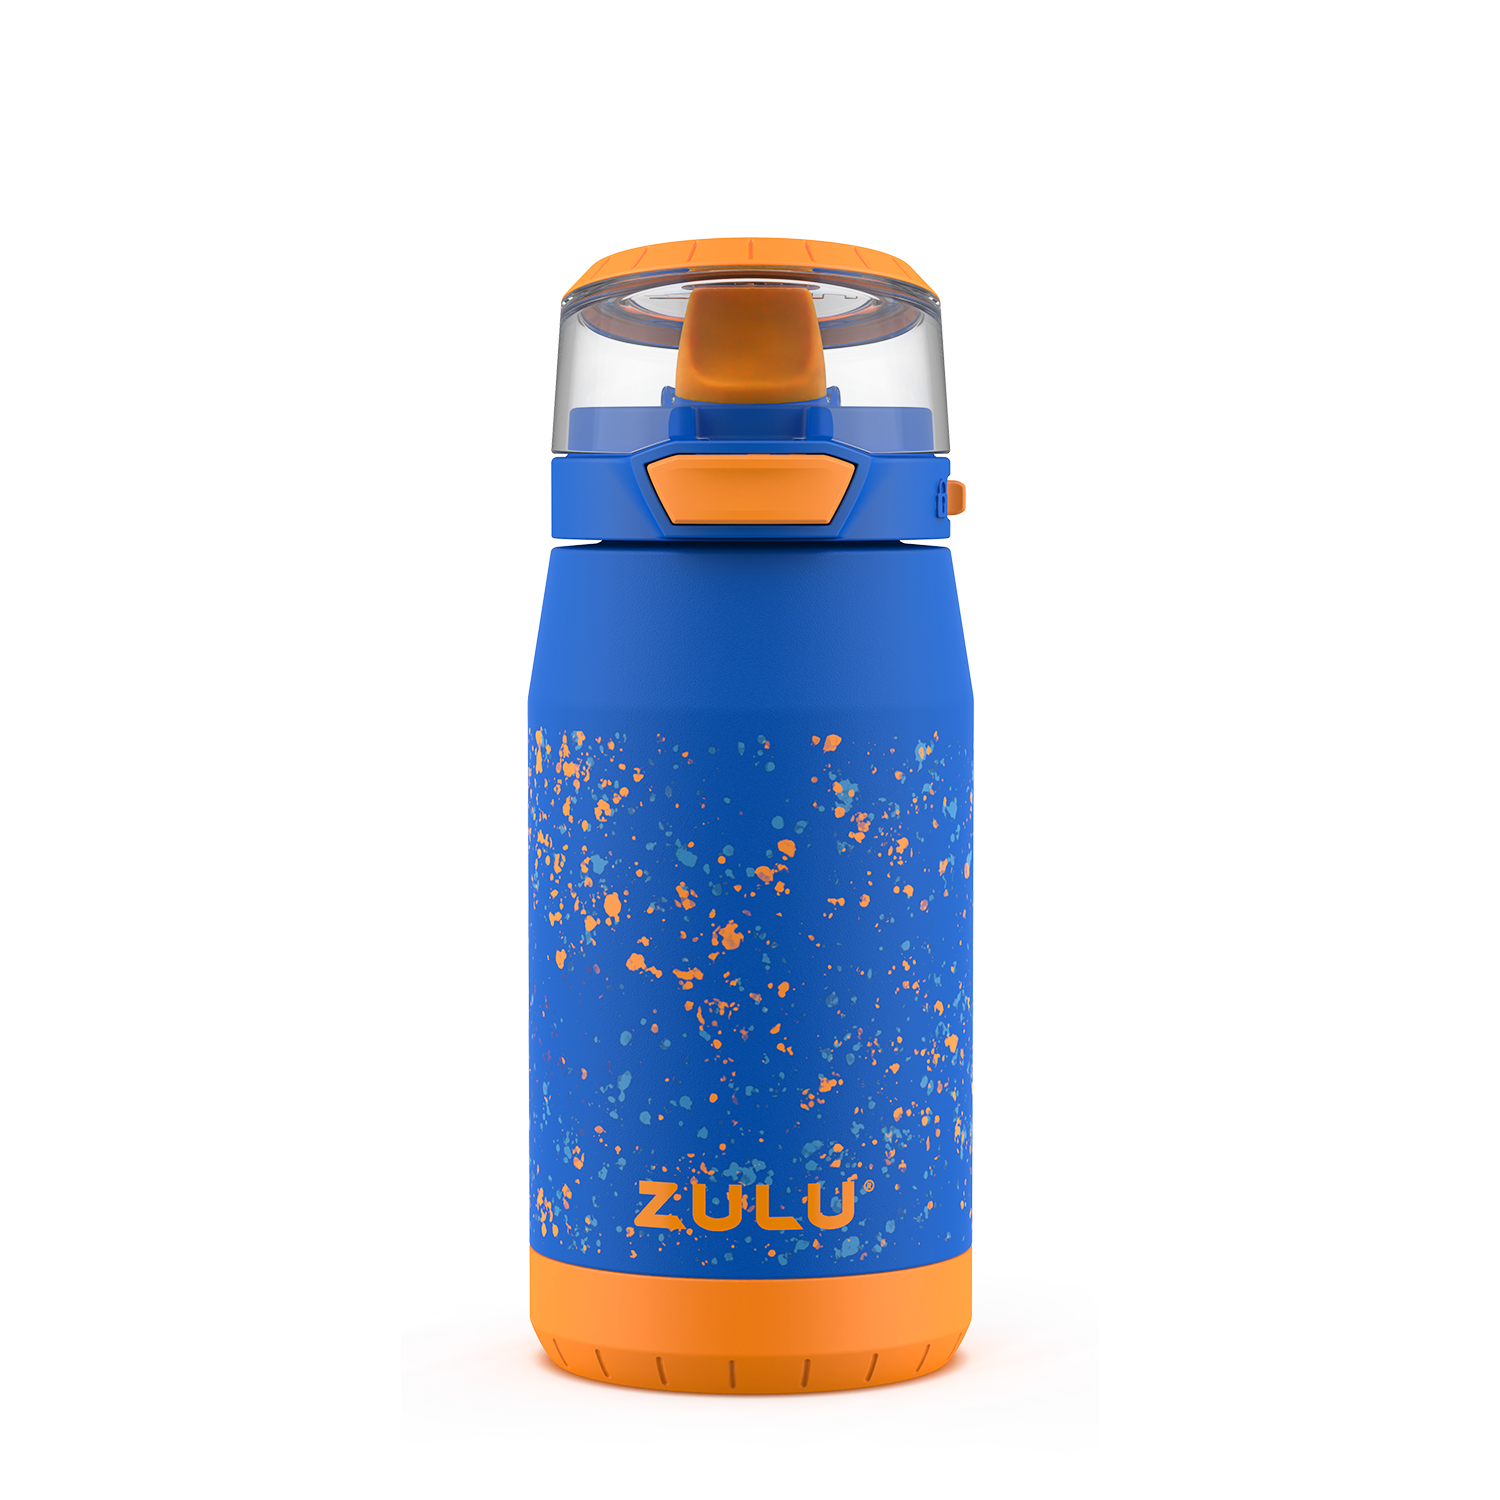 Zulu Kids Water Bottle 473ml, 2 Pack (Pink and Magenta)